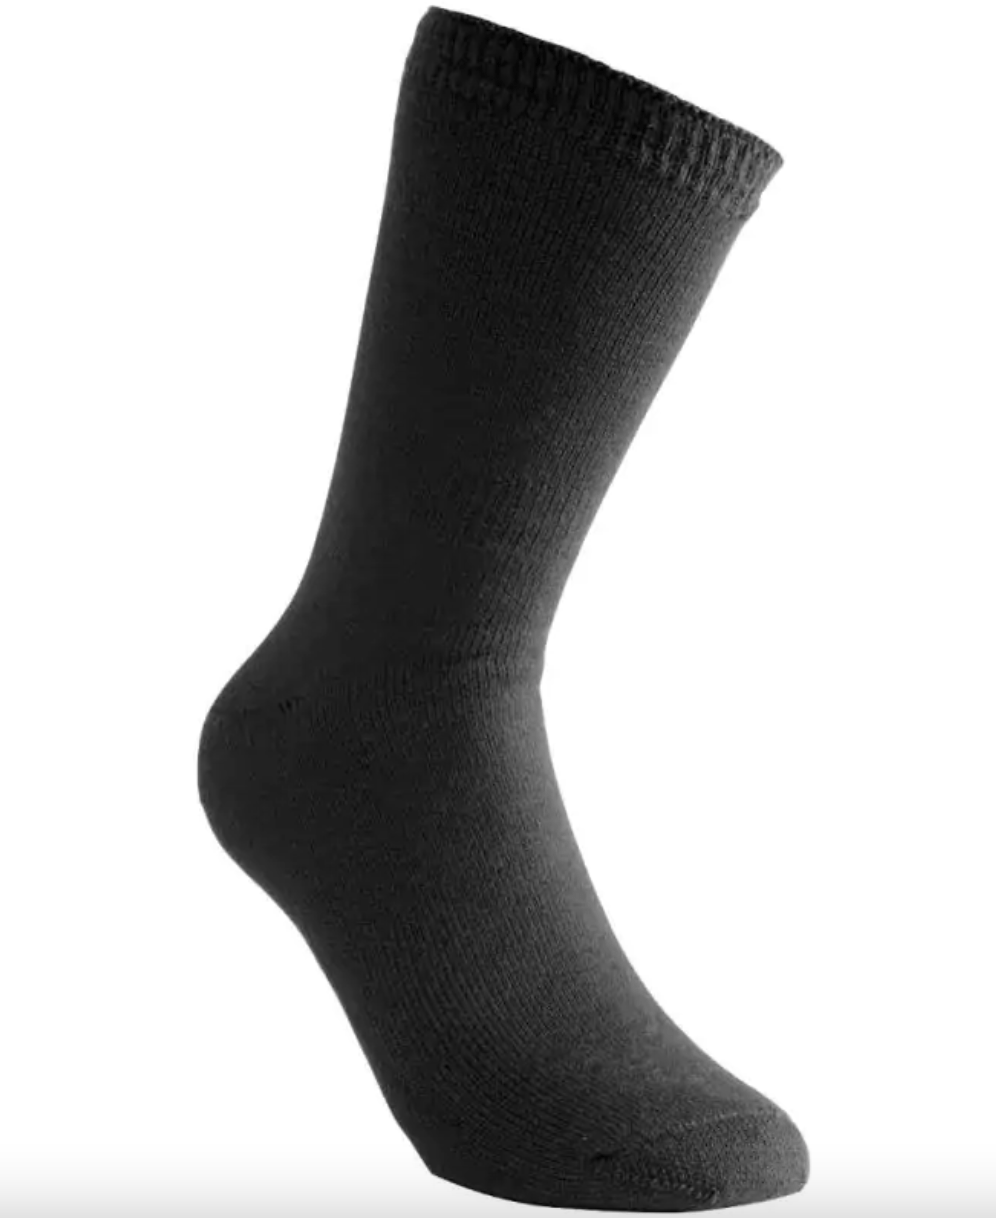 Woolpower Socks 40-44 EUEU / Black Woolpower Classic 400g Black